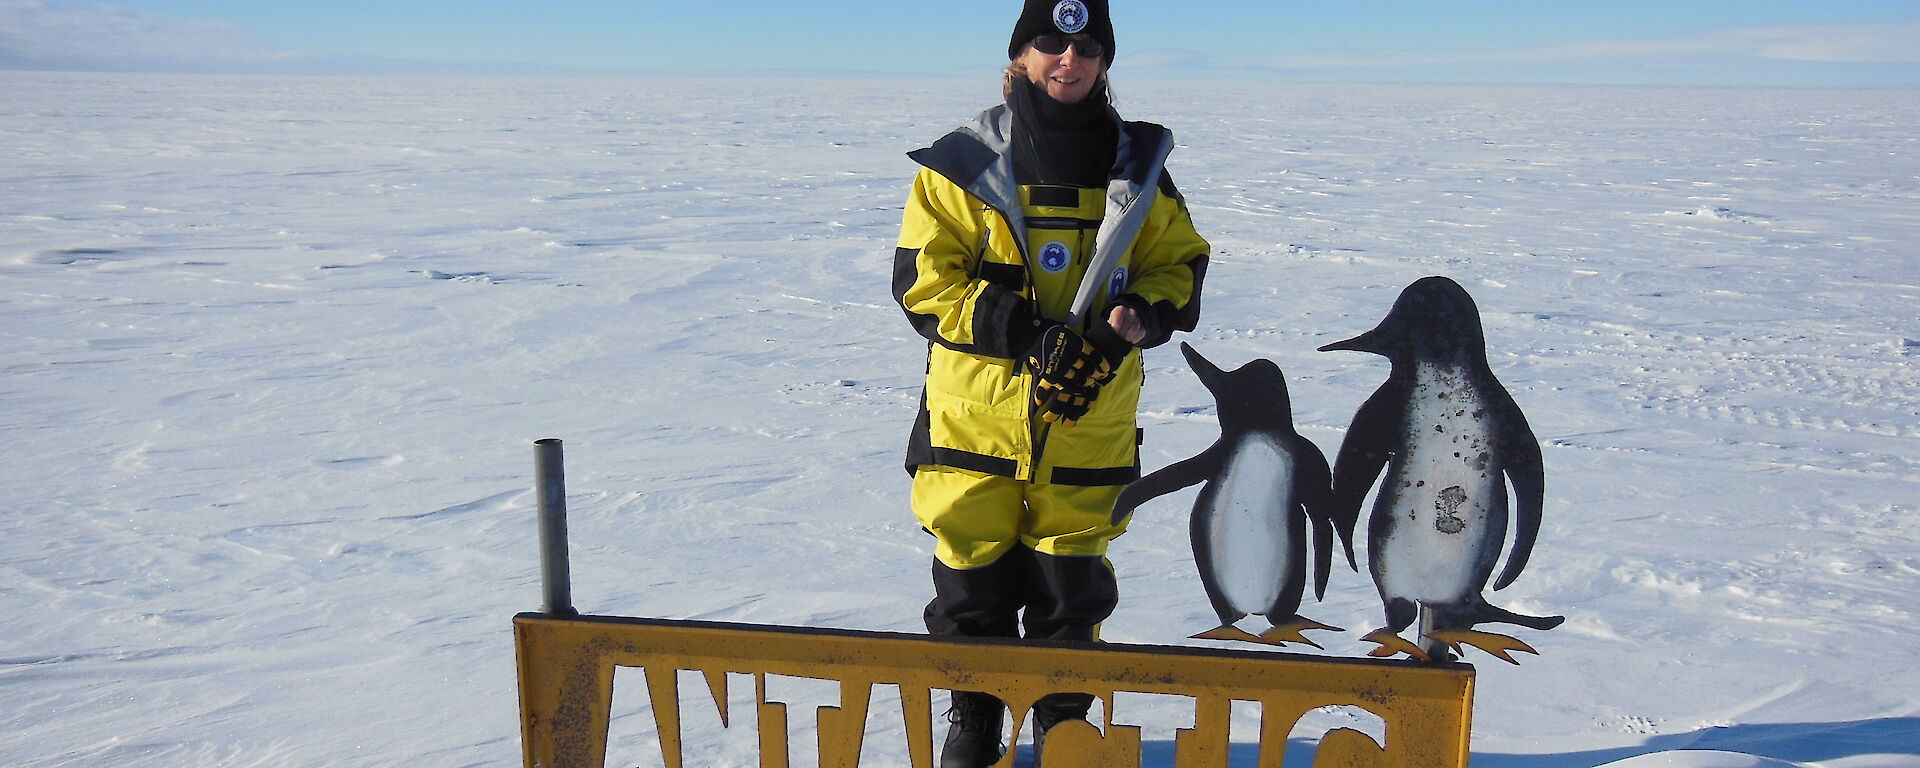 Gwen beside the Antarctic Circle sign.